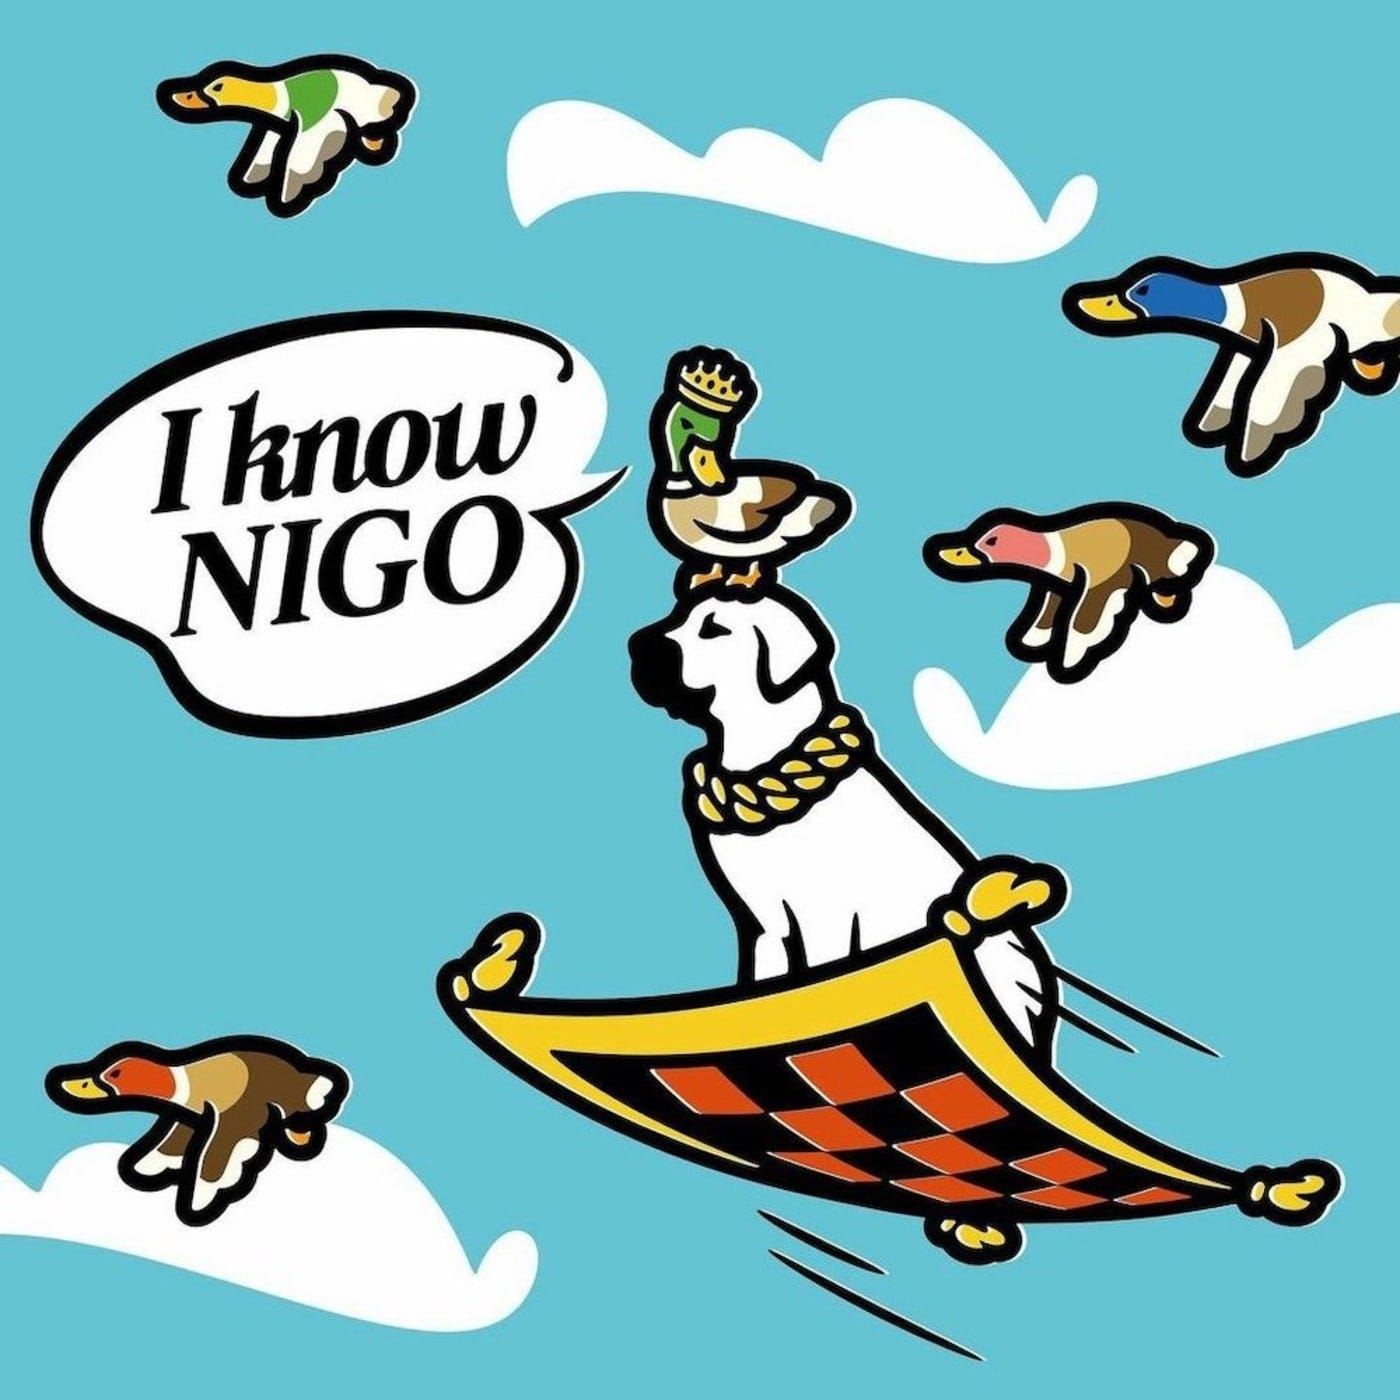 Listen to NIGO's New Album 'I Know NIGO!' f/ Pusha-T, Kid Cudi, and More |  Complex